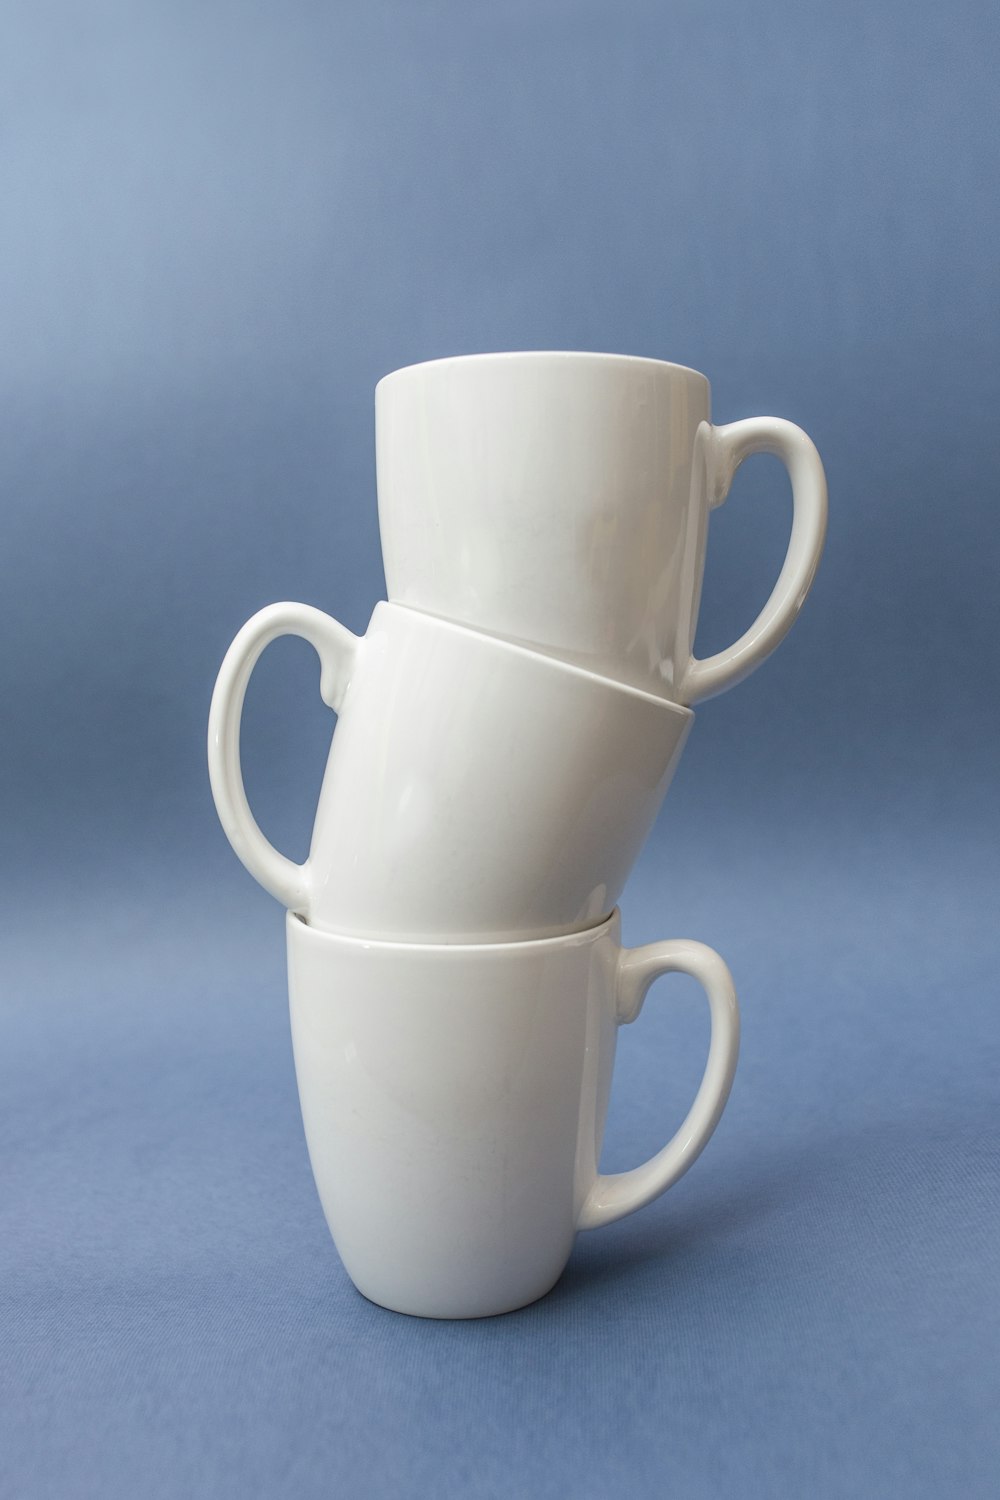 three stacked white ceramic cups